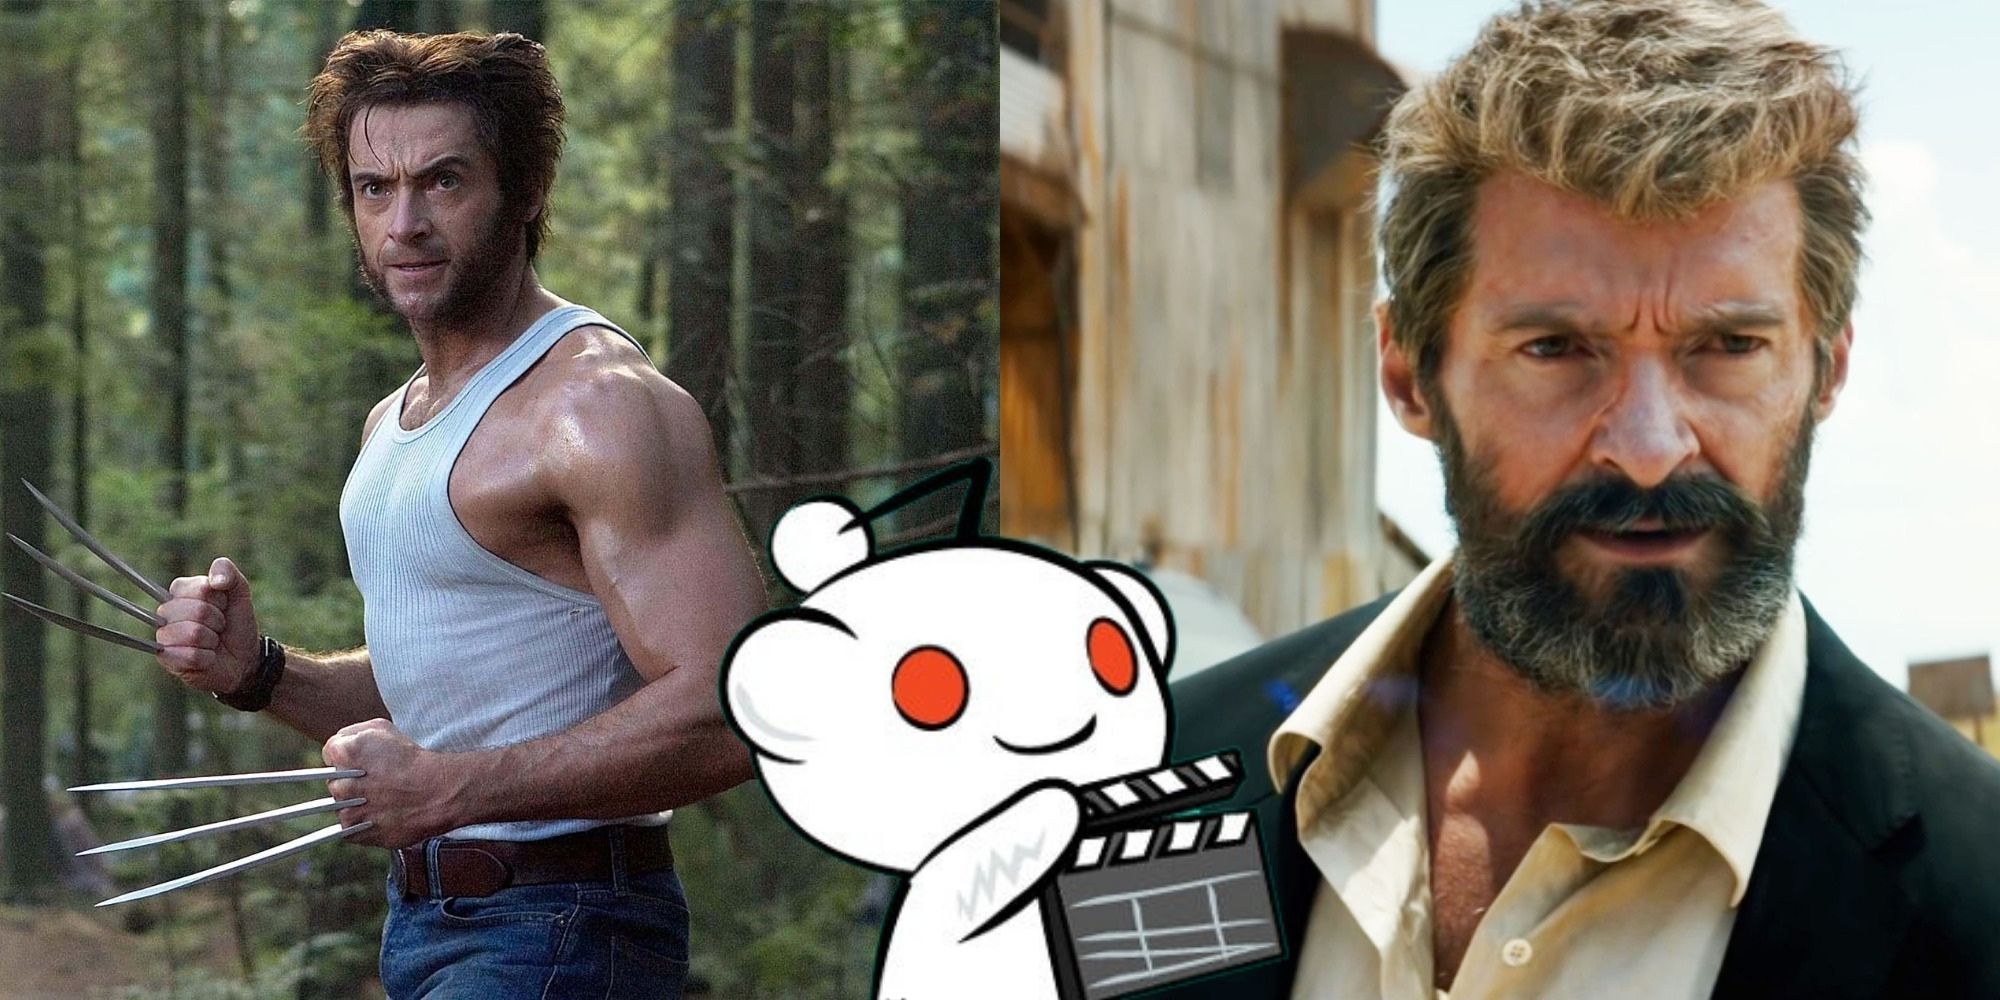 Split image showing Hugh Jackman as Wolverine and Snoo from Reddit